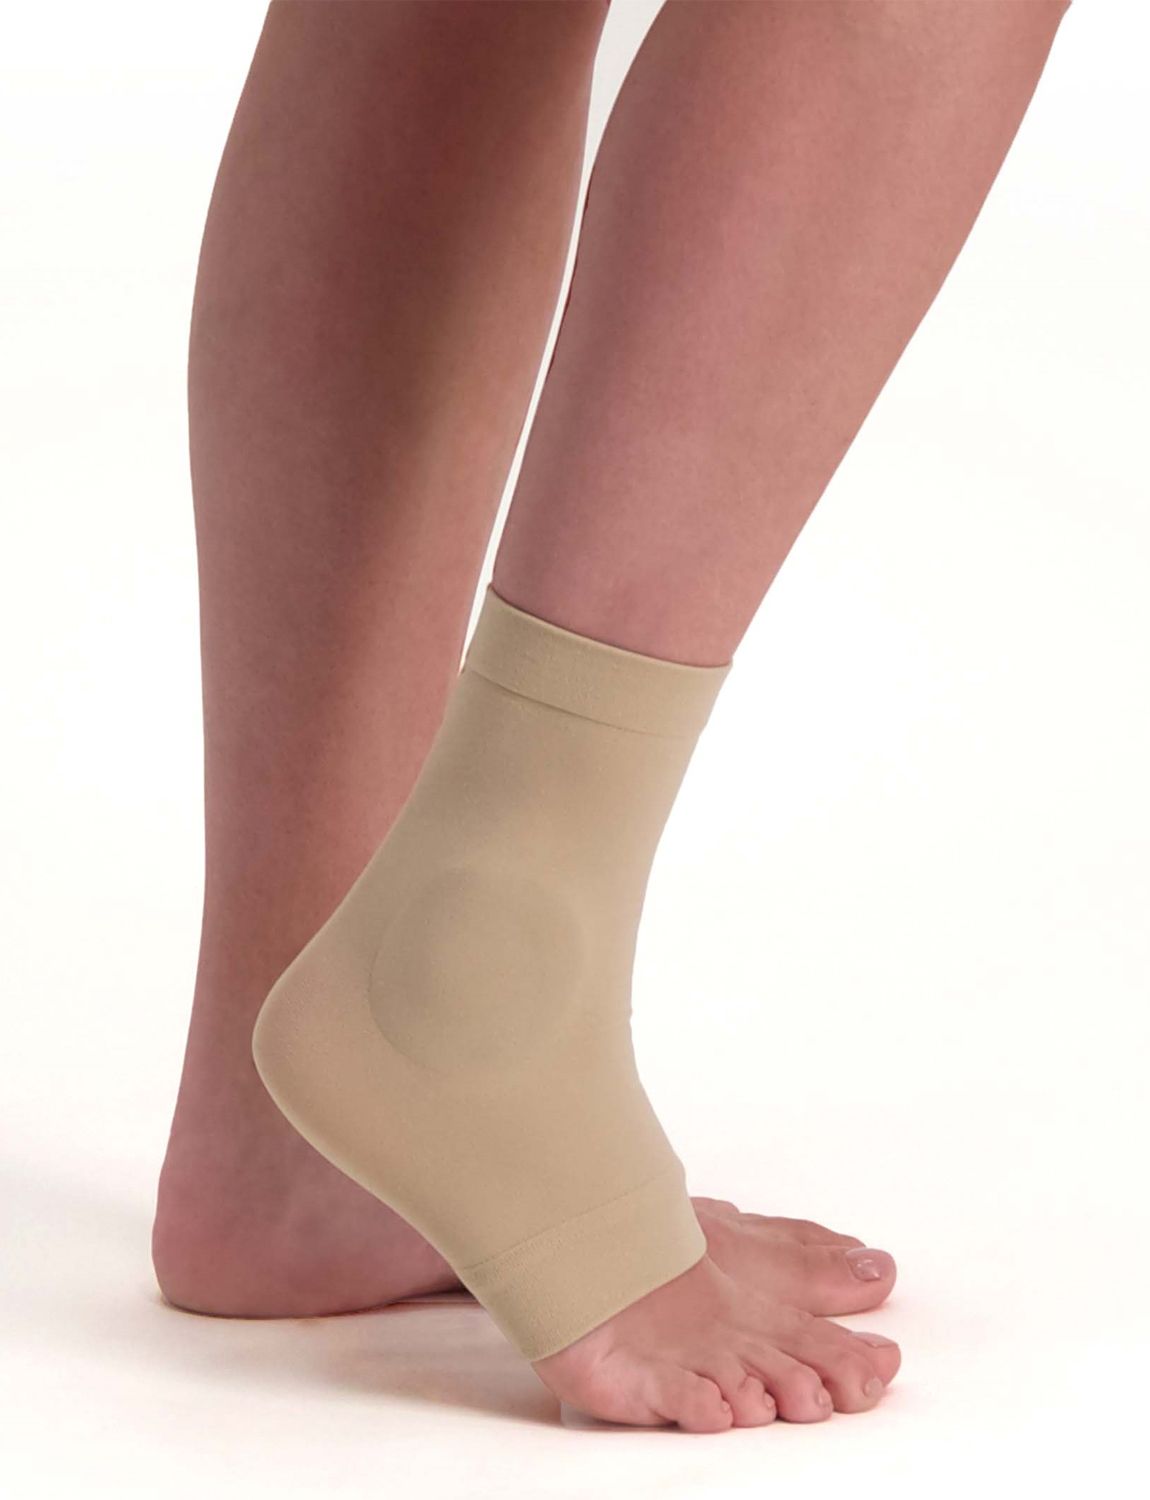 solelution ankle gel sock for sale